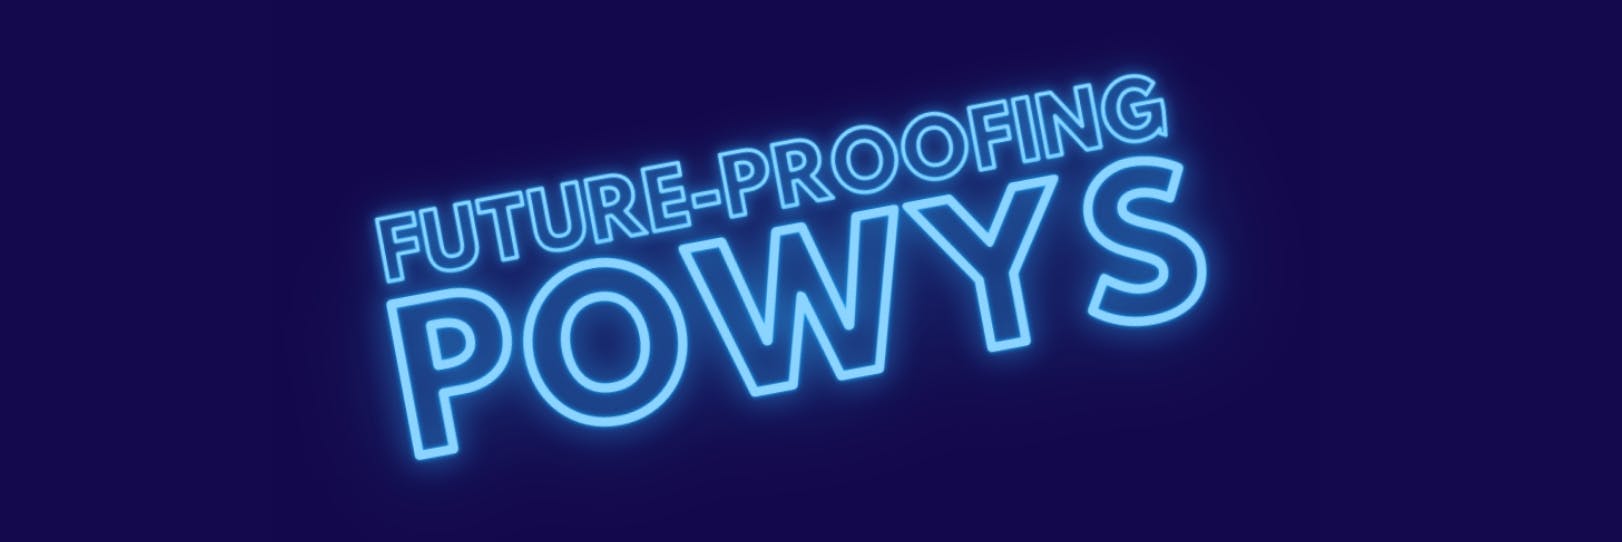 Future-proofing Powys branding